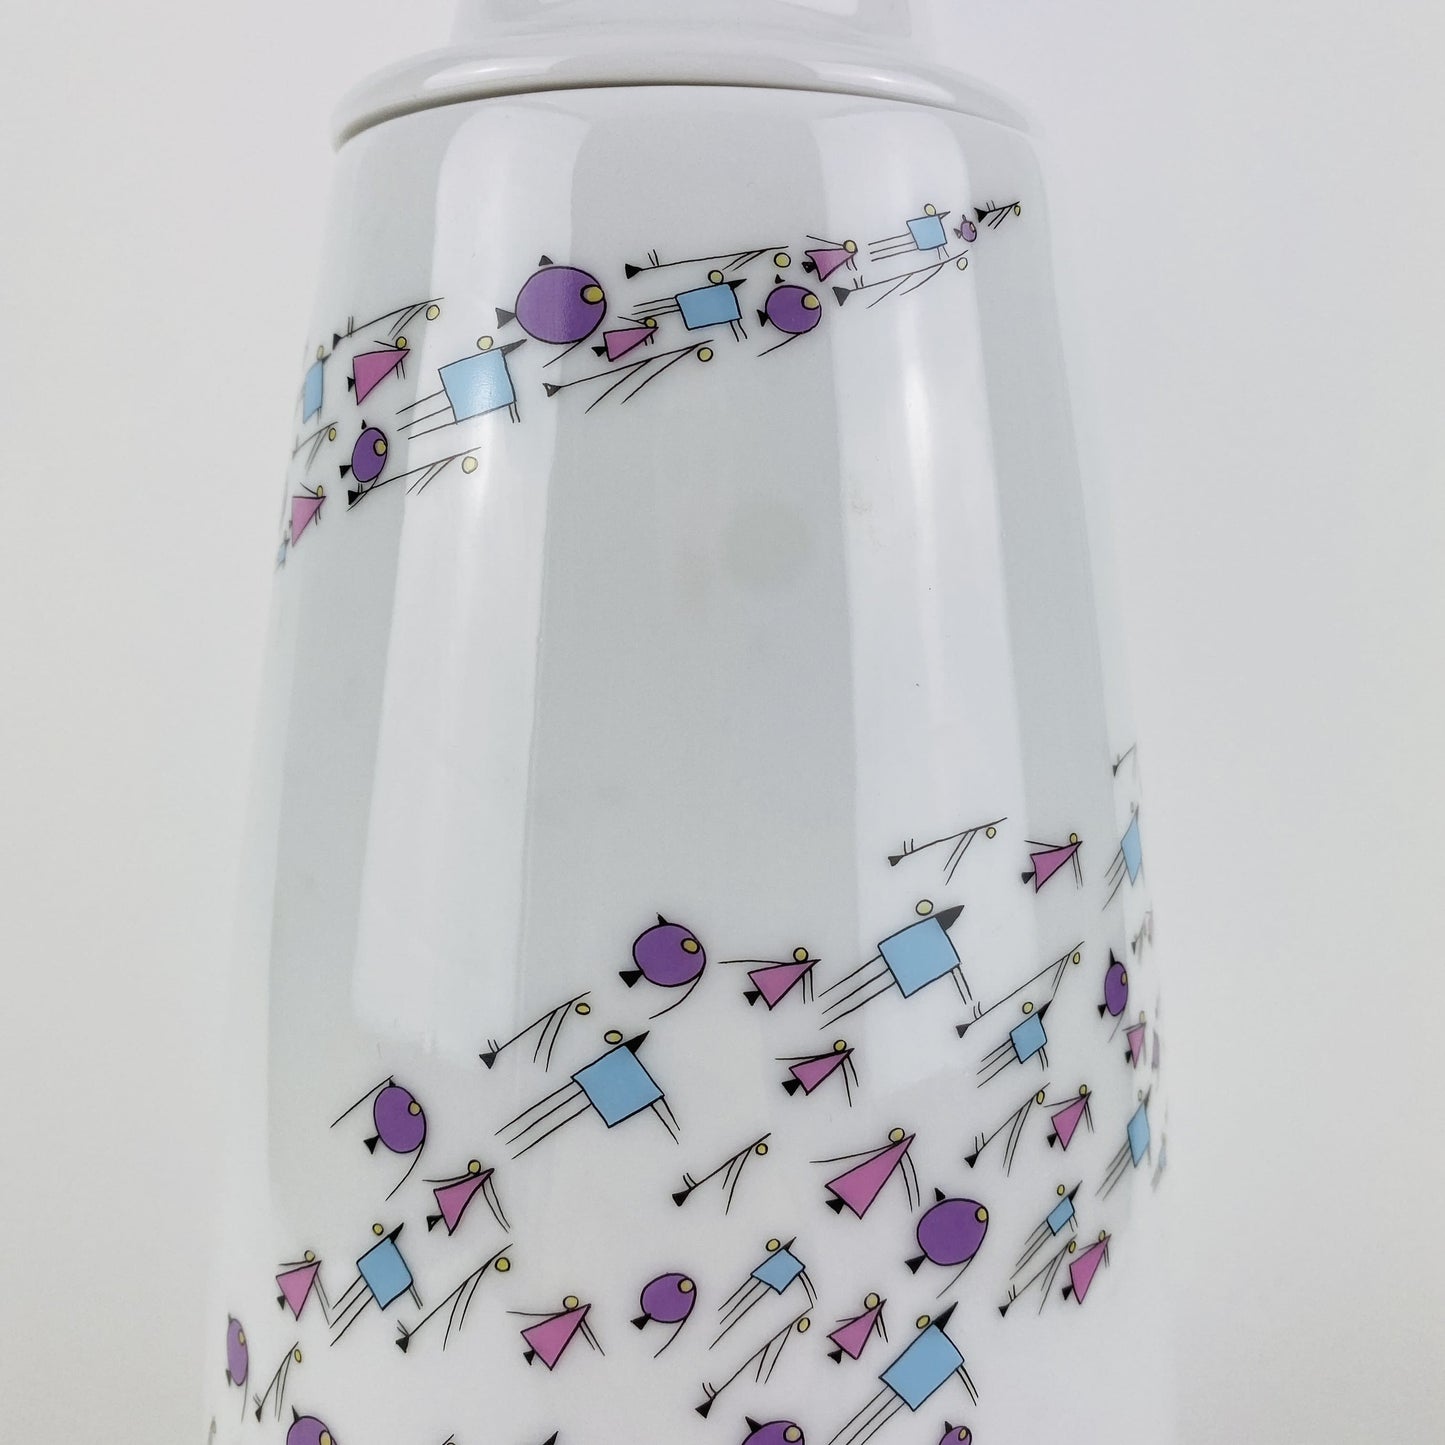 Alessi Tendentse Vase by Giorgio Rava for Alessandro Mendini 100% Make-up series - No. 69